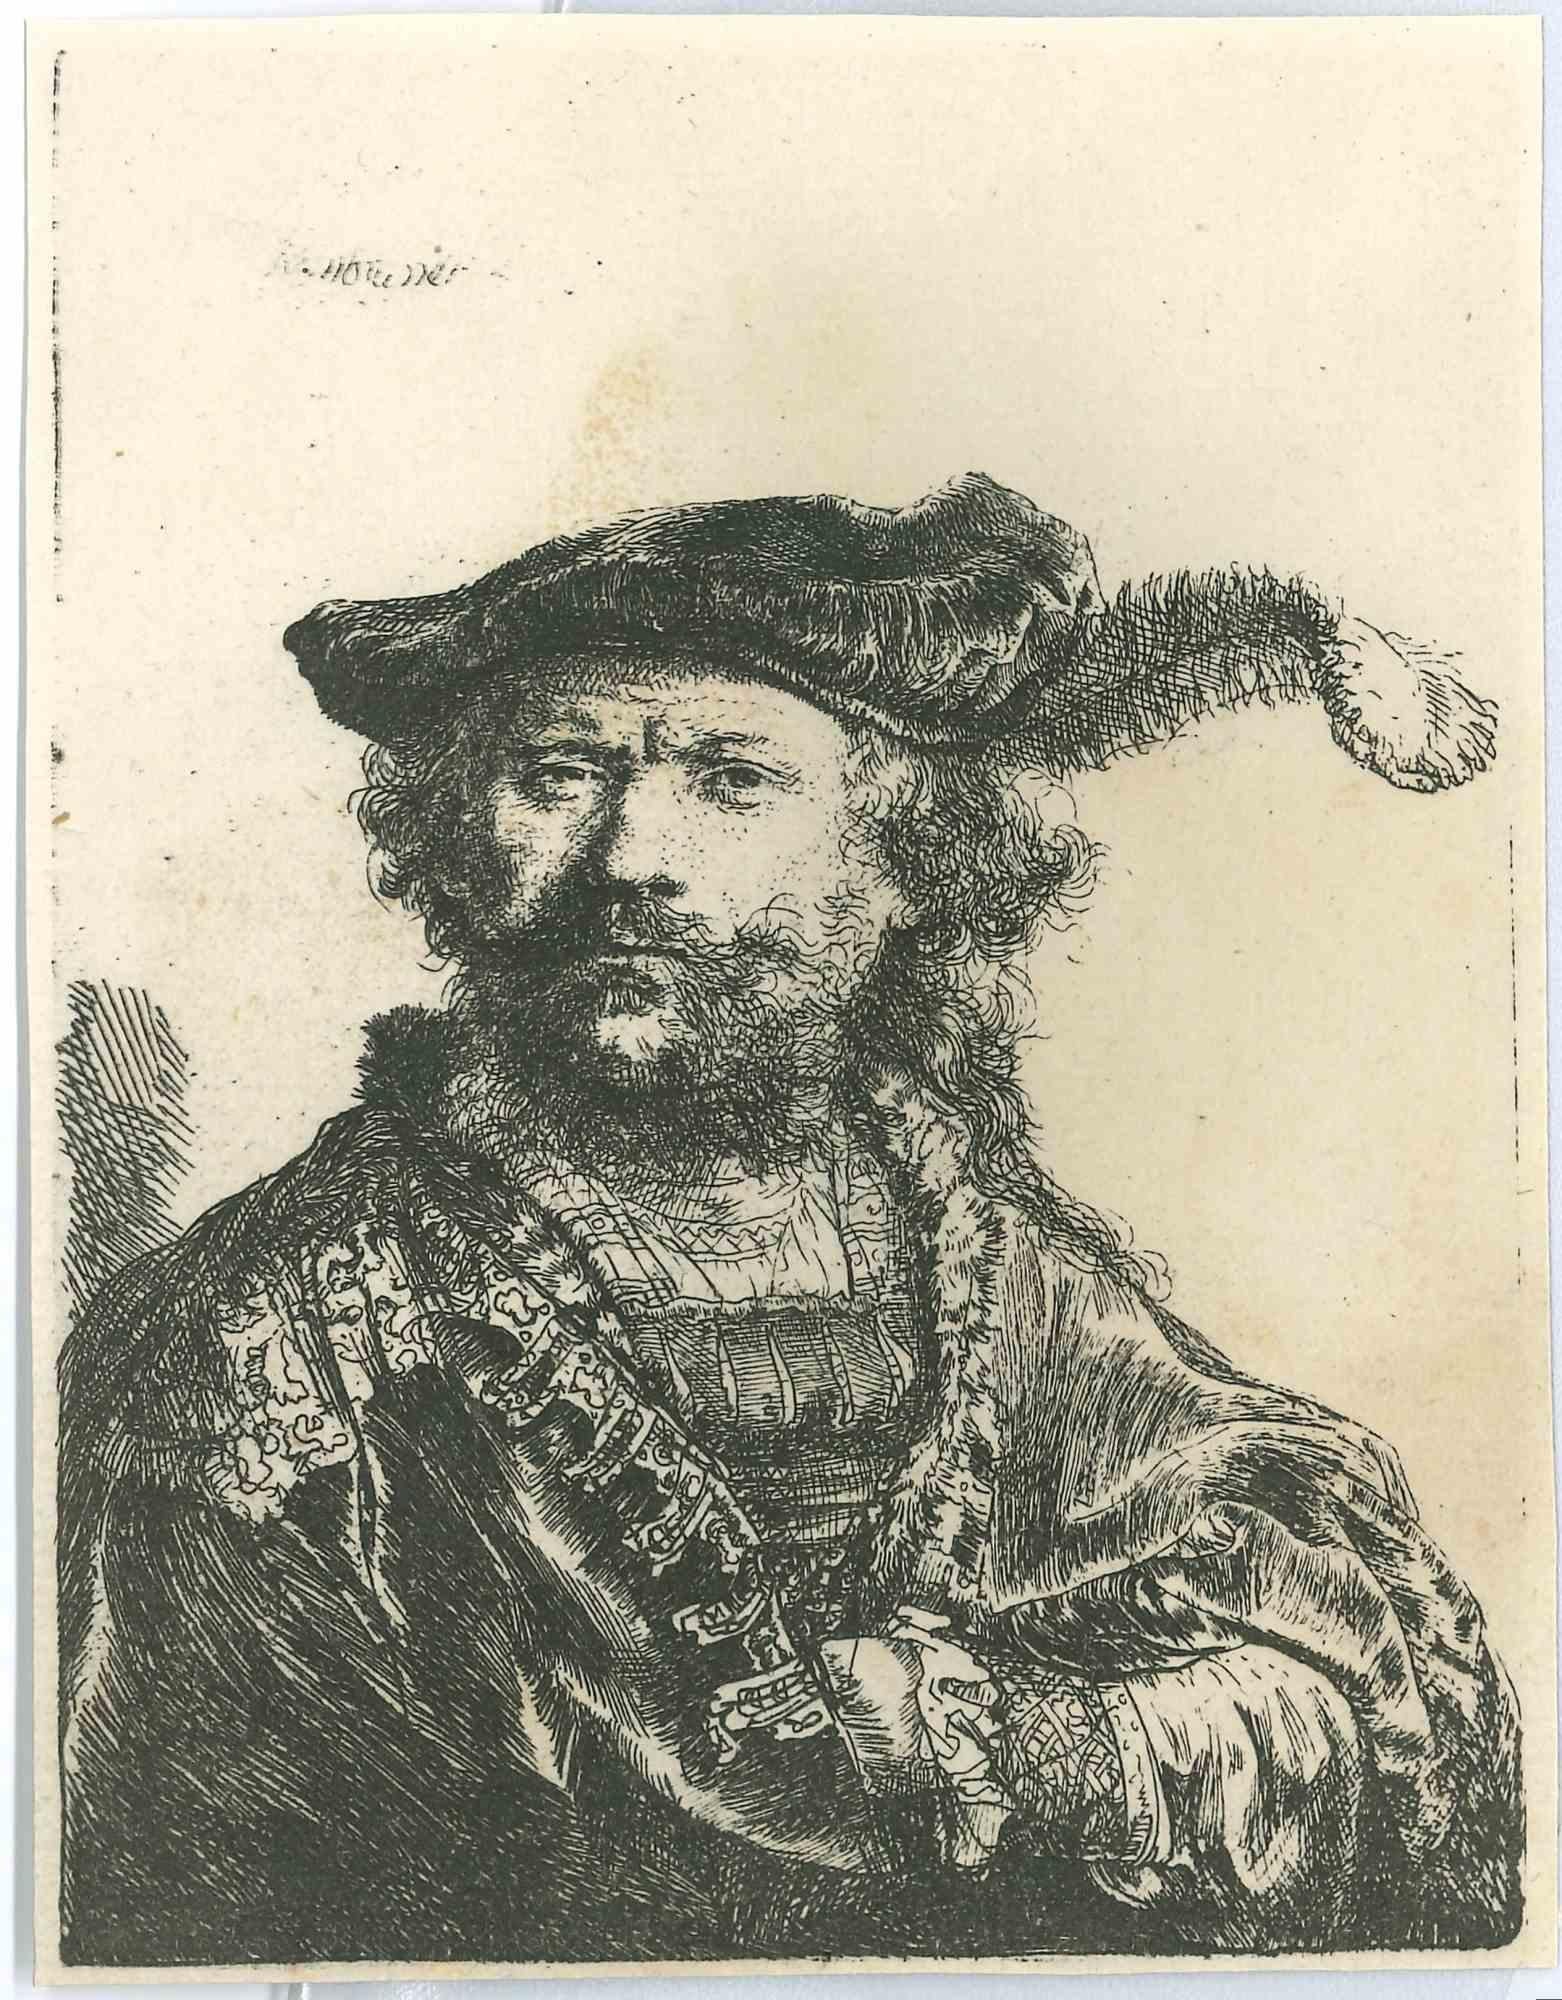 (After) Rembrandt van Rijn  Figurative Print - Self-Portrait in a Velvet Cap with Plum - Etching after Rembrandt -19th Century 